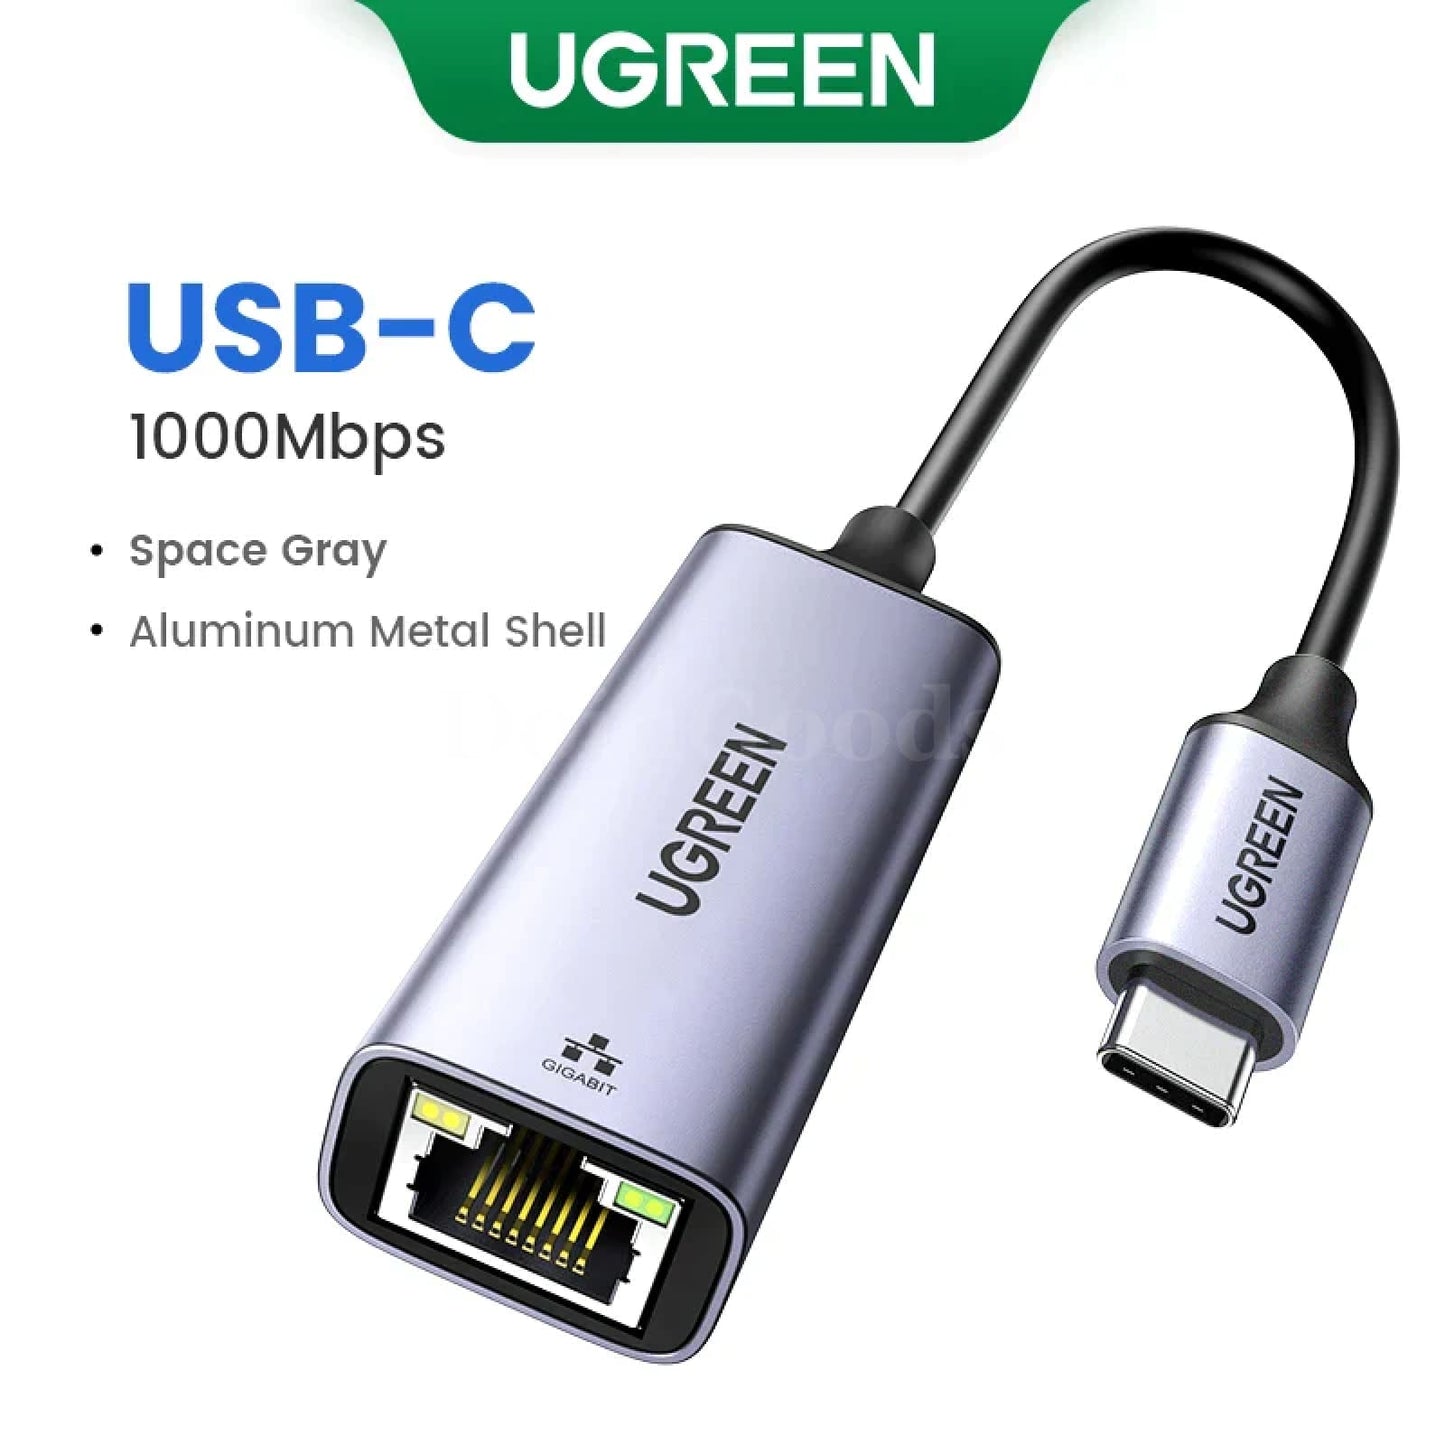 Ugreen Usb C Ethernet Adapter 1000/100Mbps Lan Rj45 For Laptop Macbook Usb-C Space Gray 301635